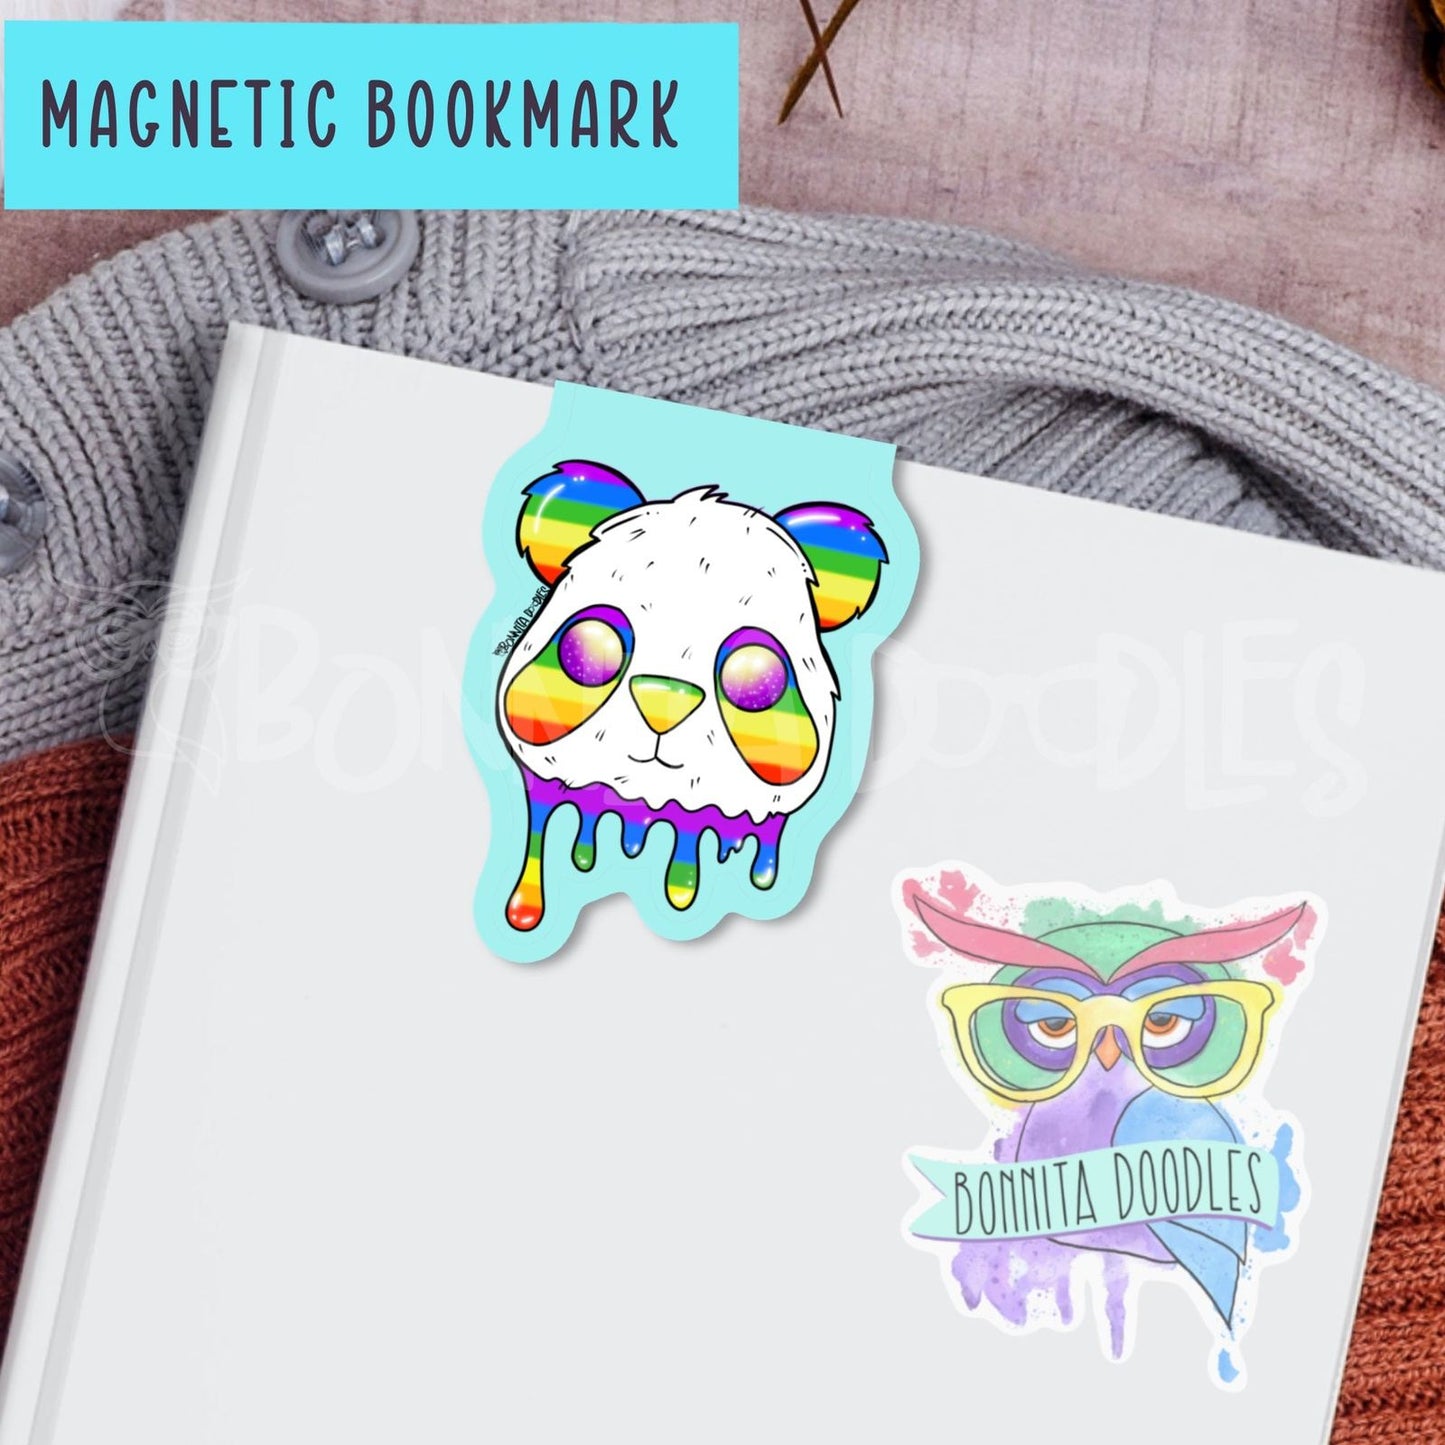 Rainbow Panda magnetic bookmark - the perfect gift